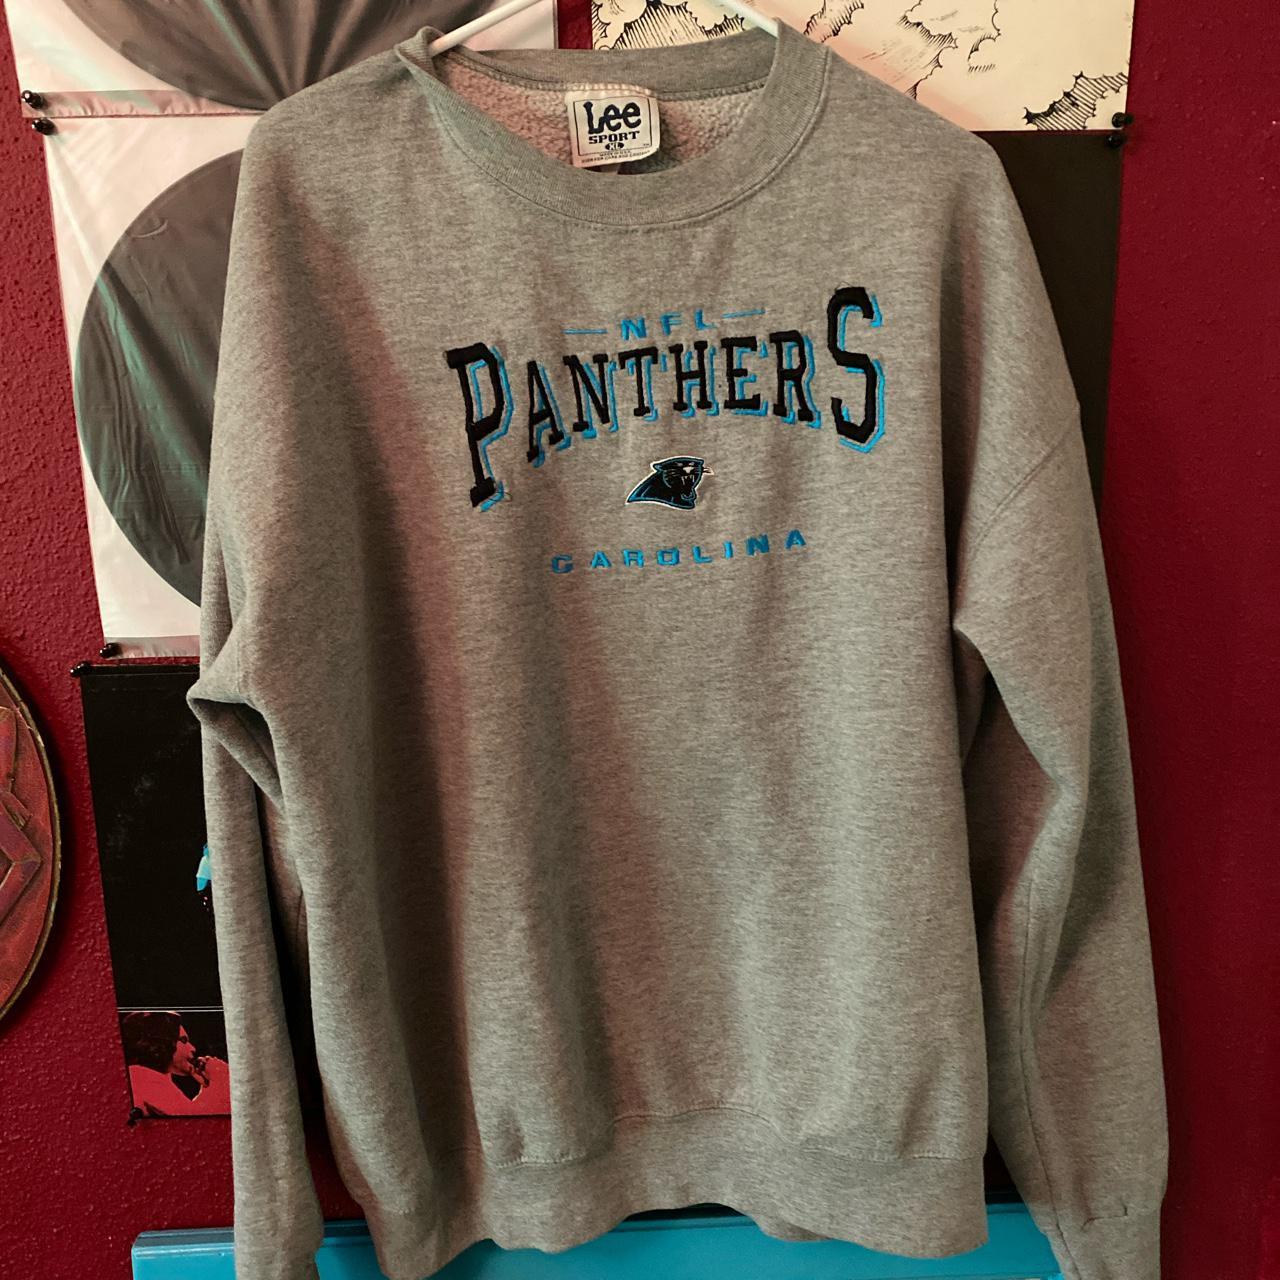 north carolina panthers sweatshirt